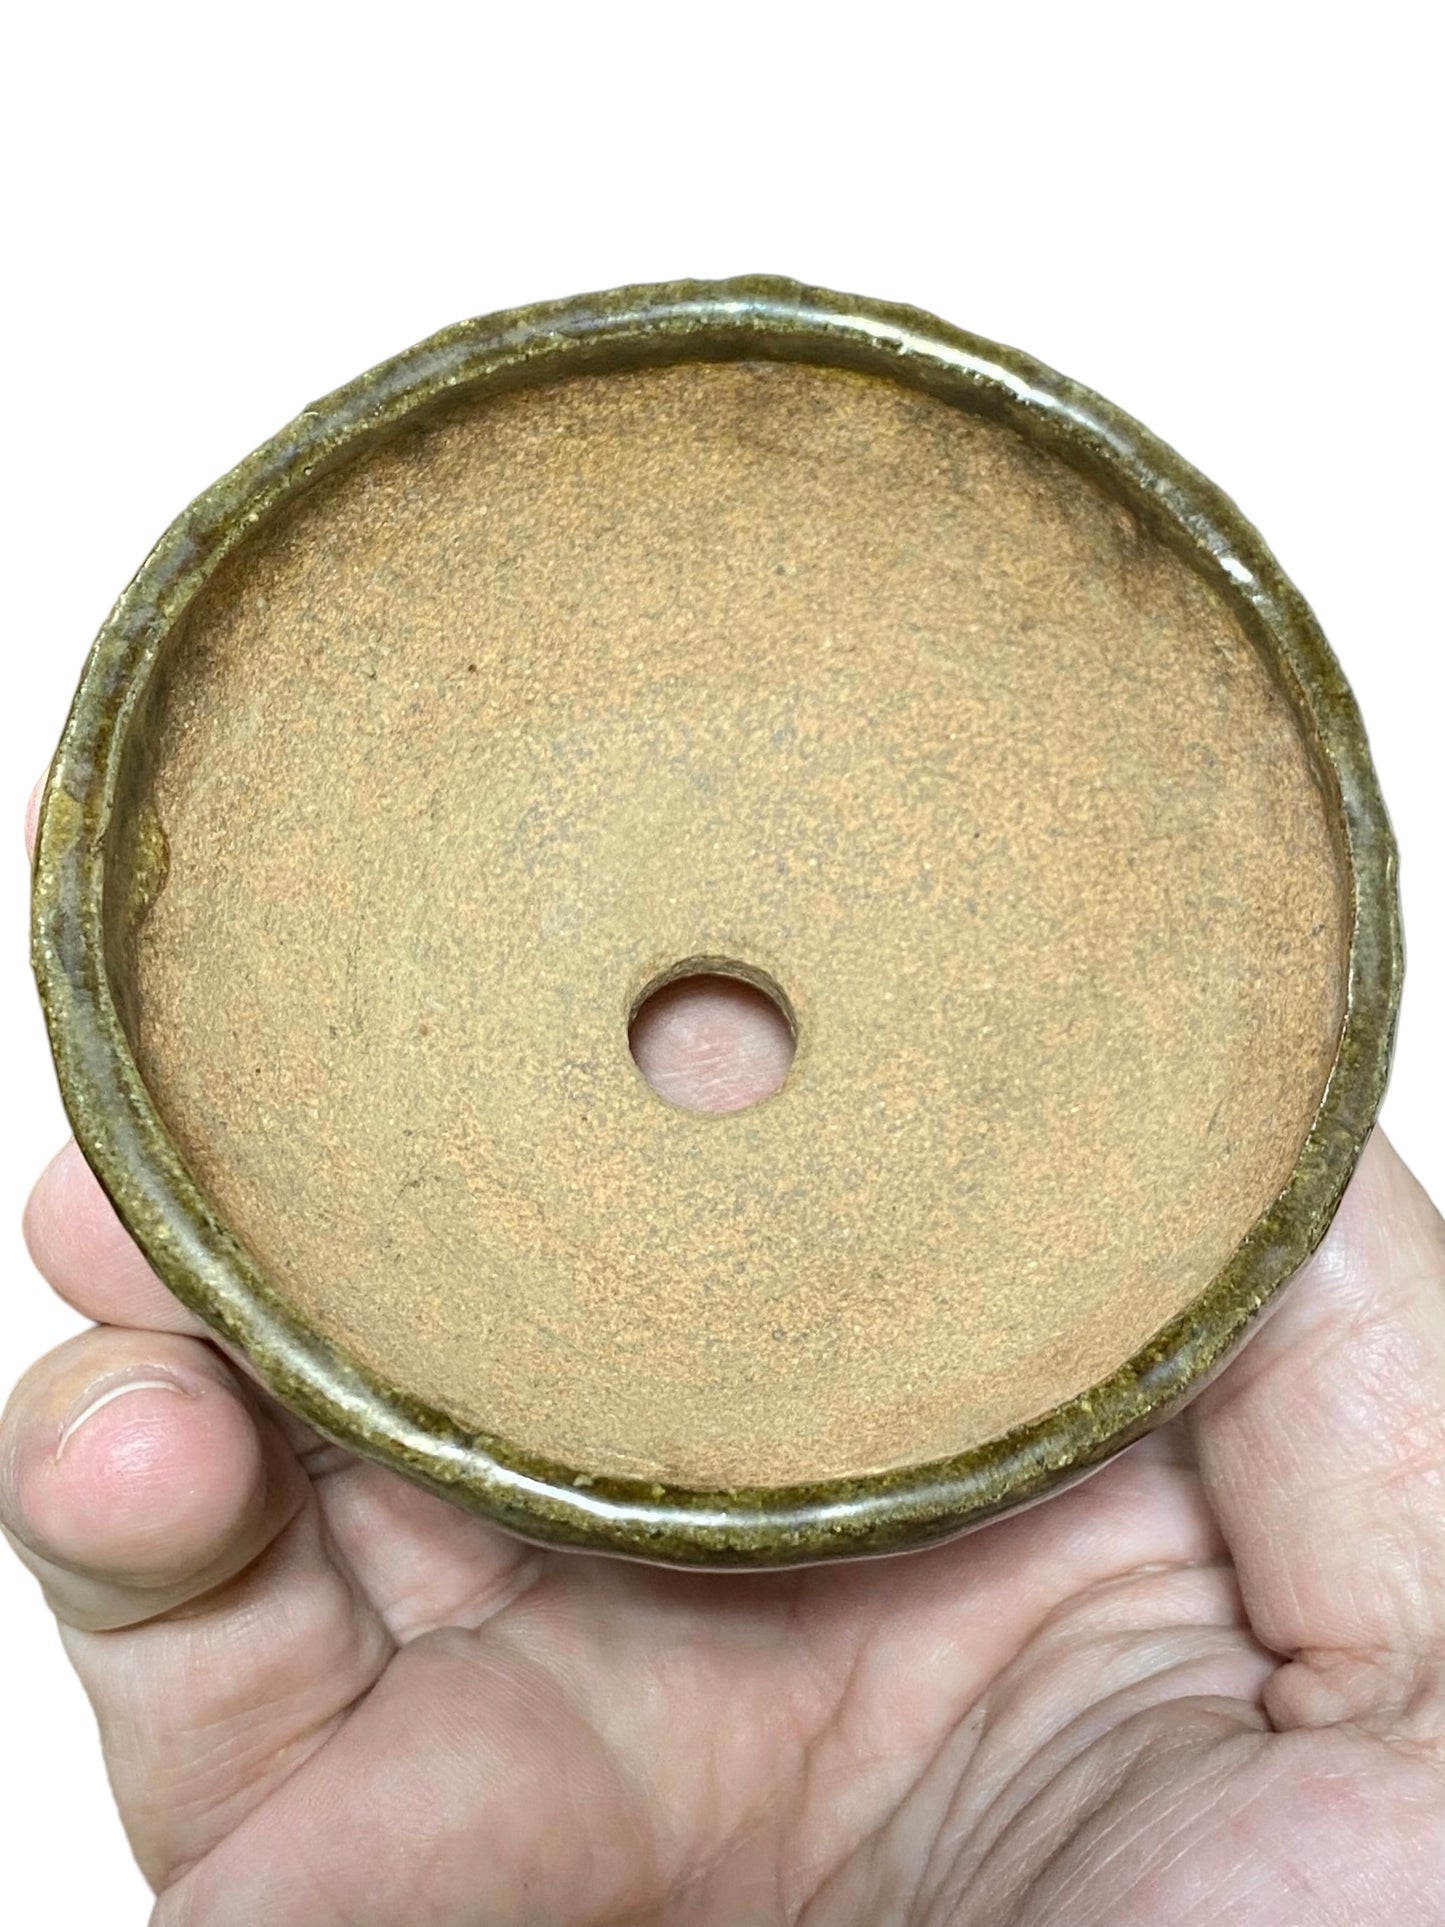 Housen - Glazed Bowl Bonsai or Accent Pot